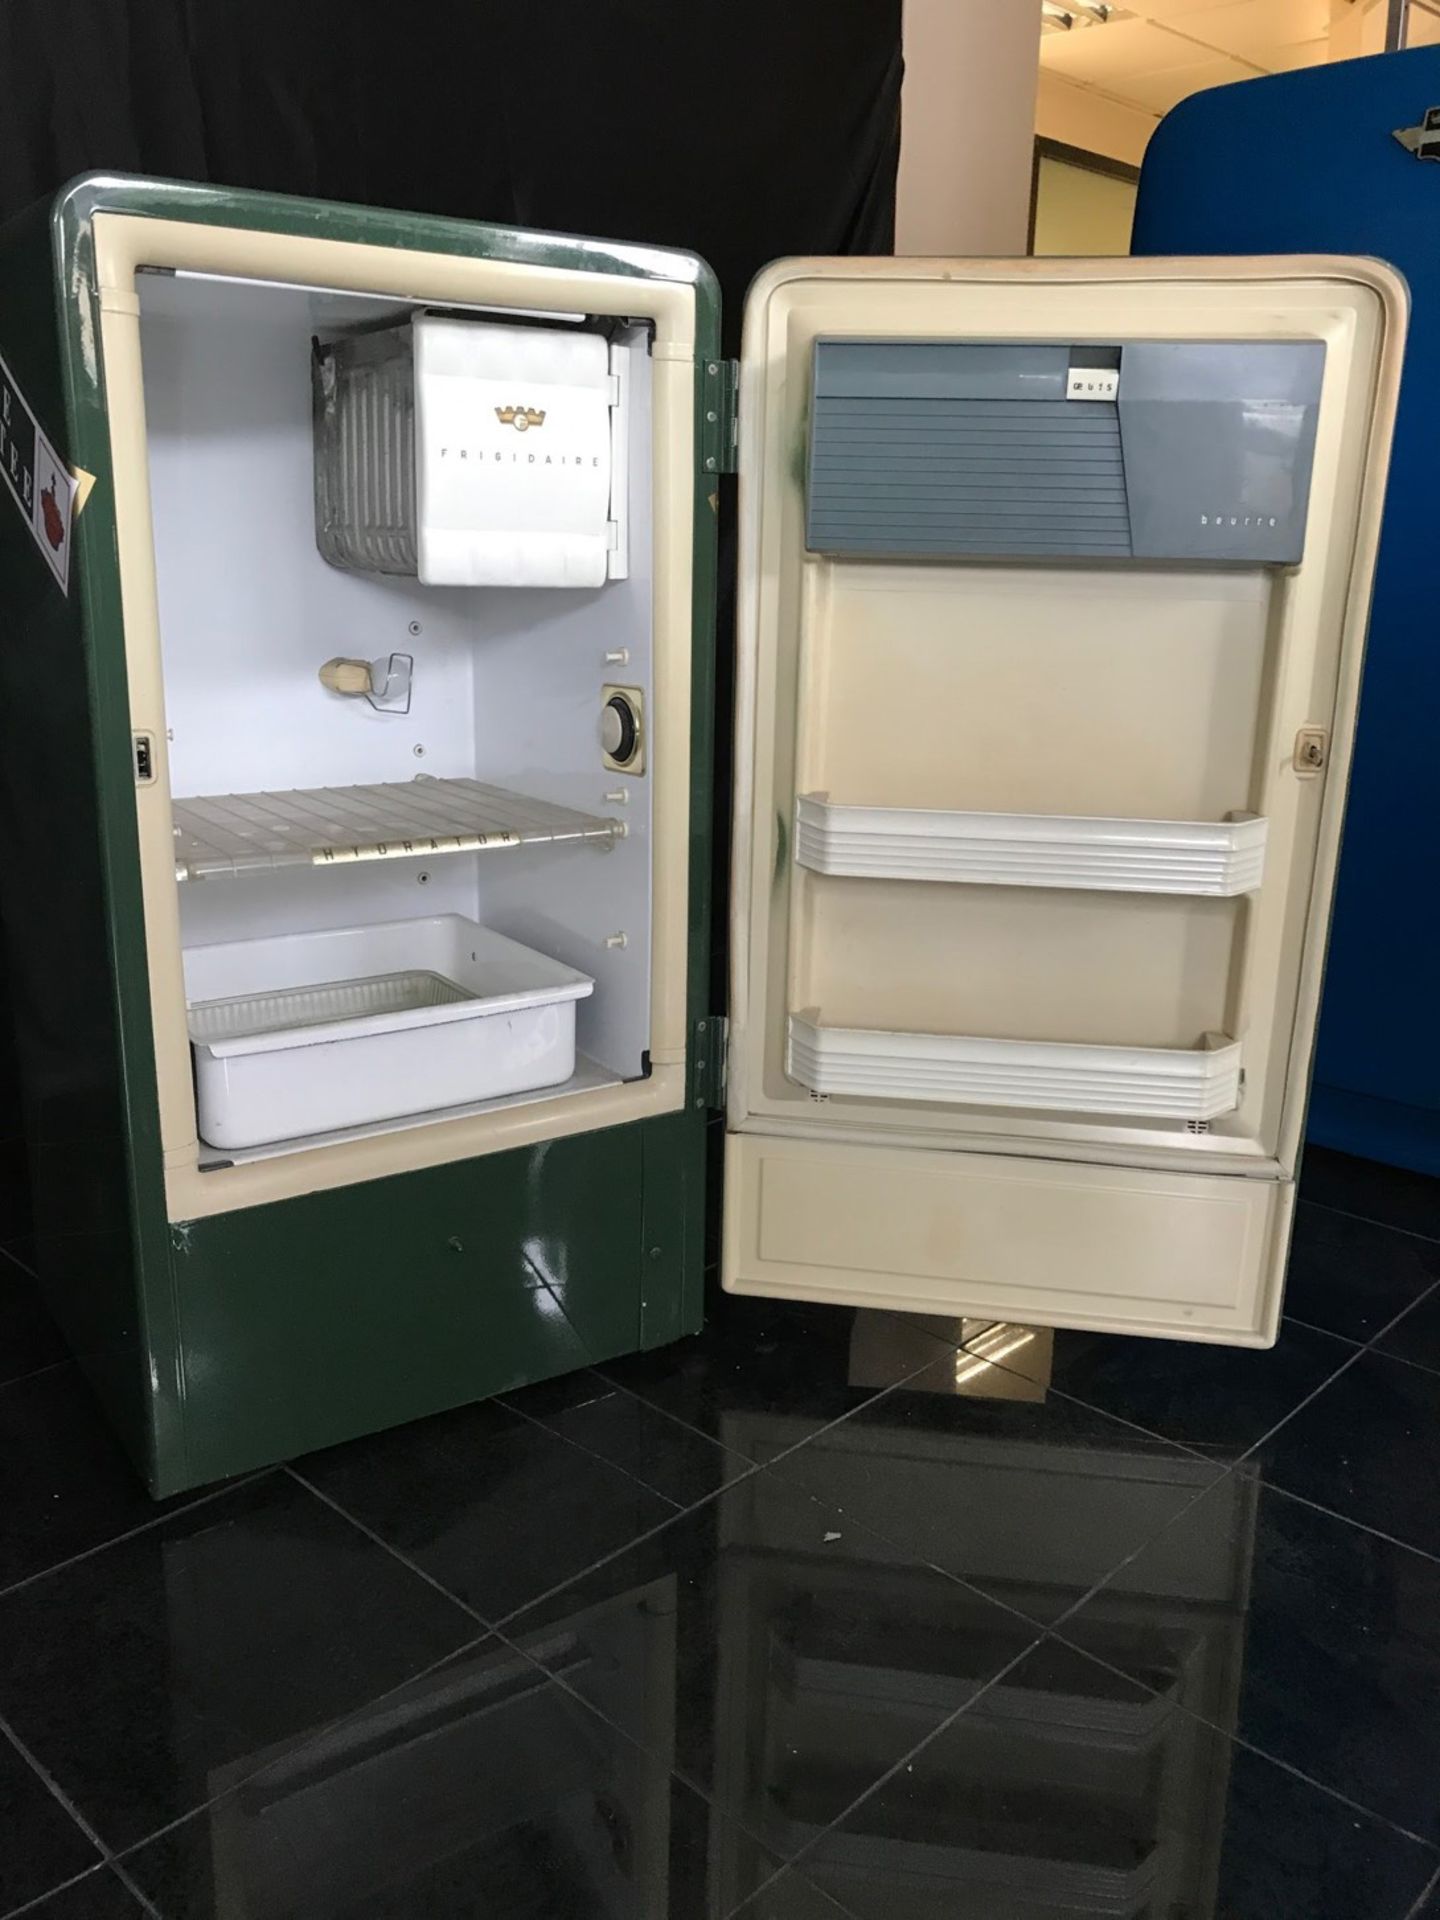 1960 Frigidaire Carlsberg Beer Refrigerator in Glossy Green Color - Image 2 of 2